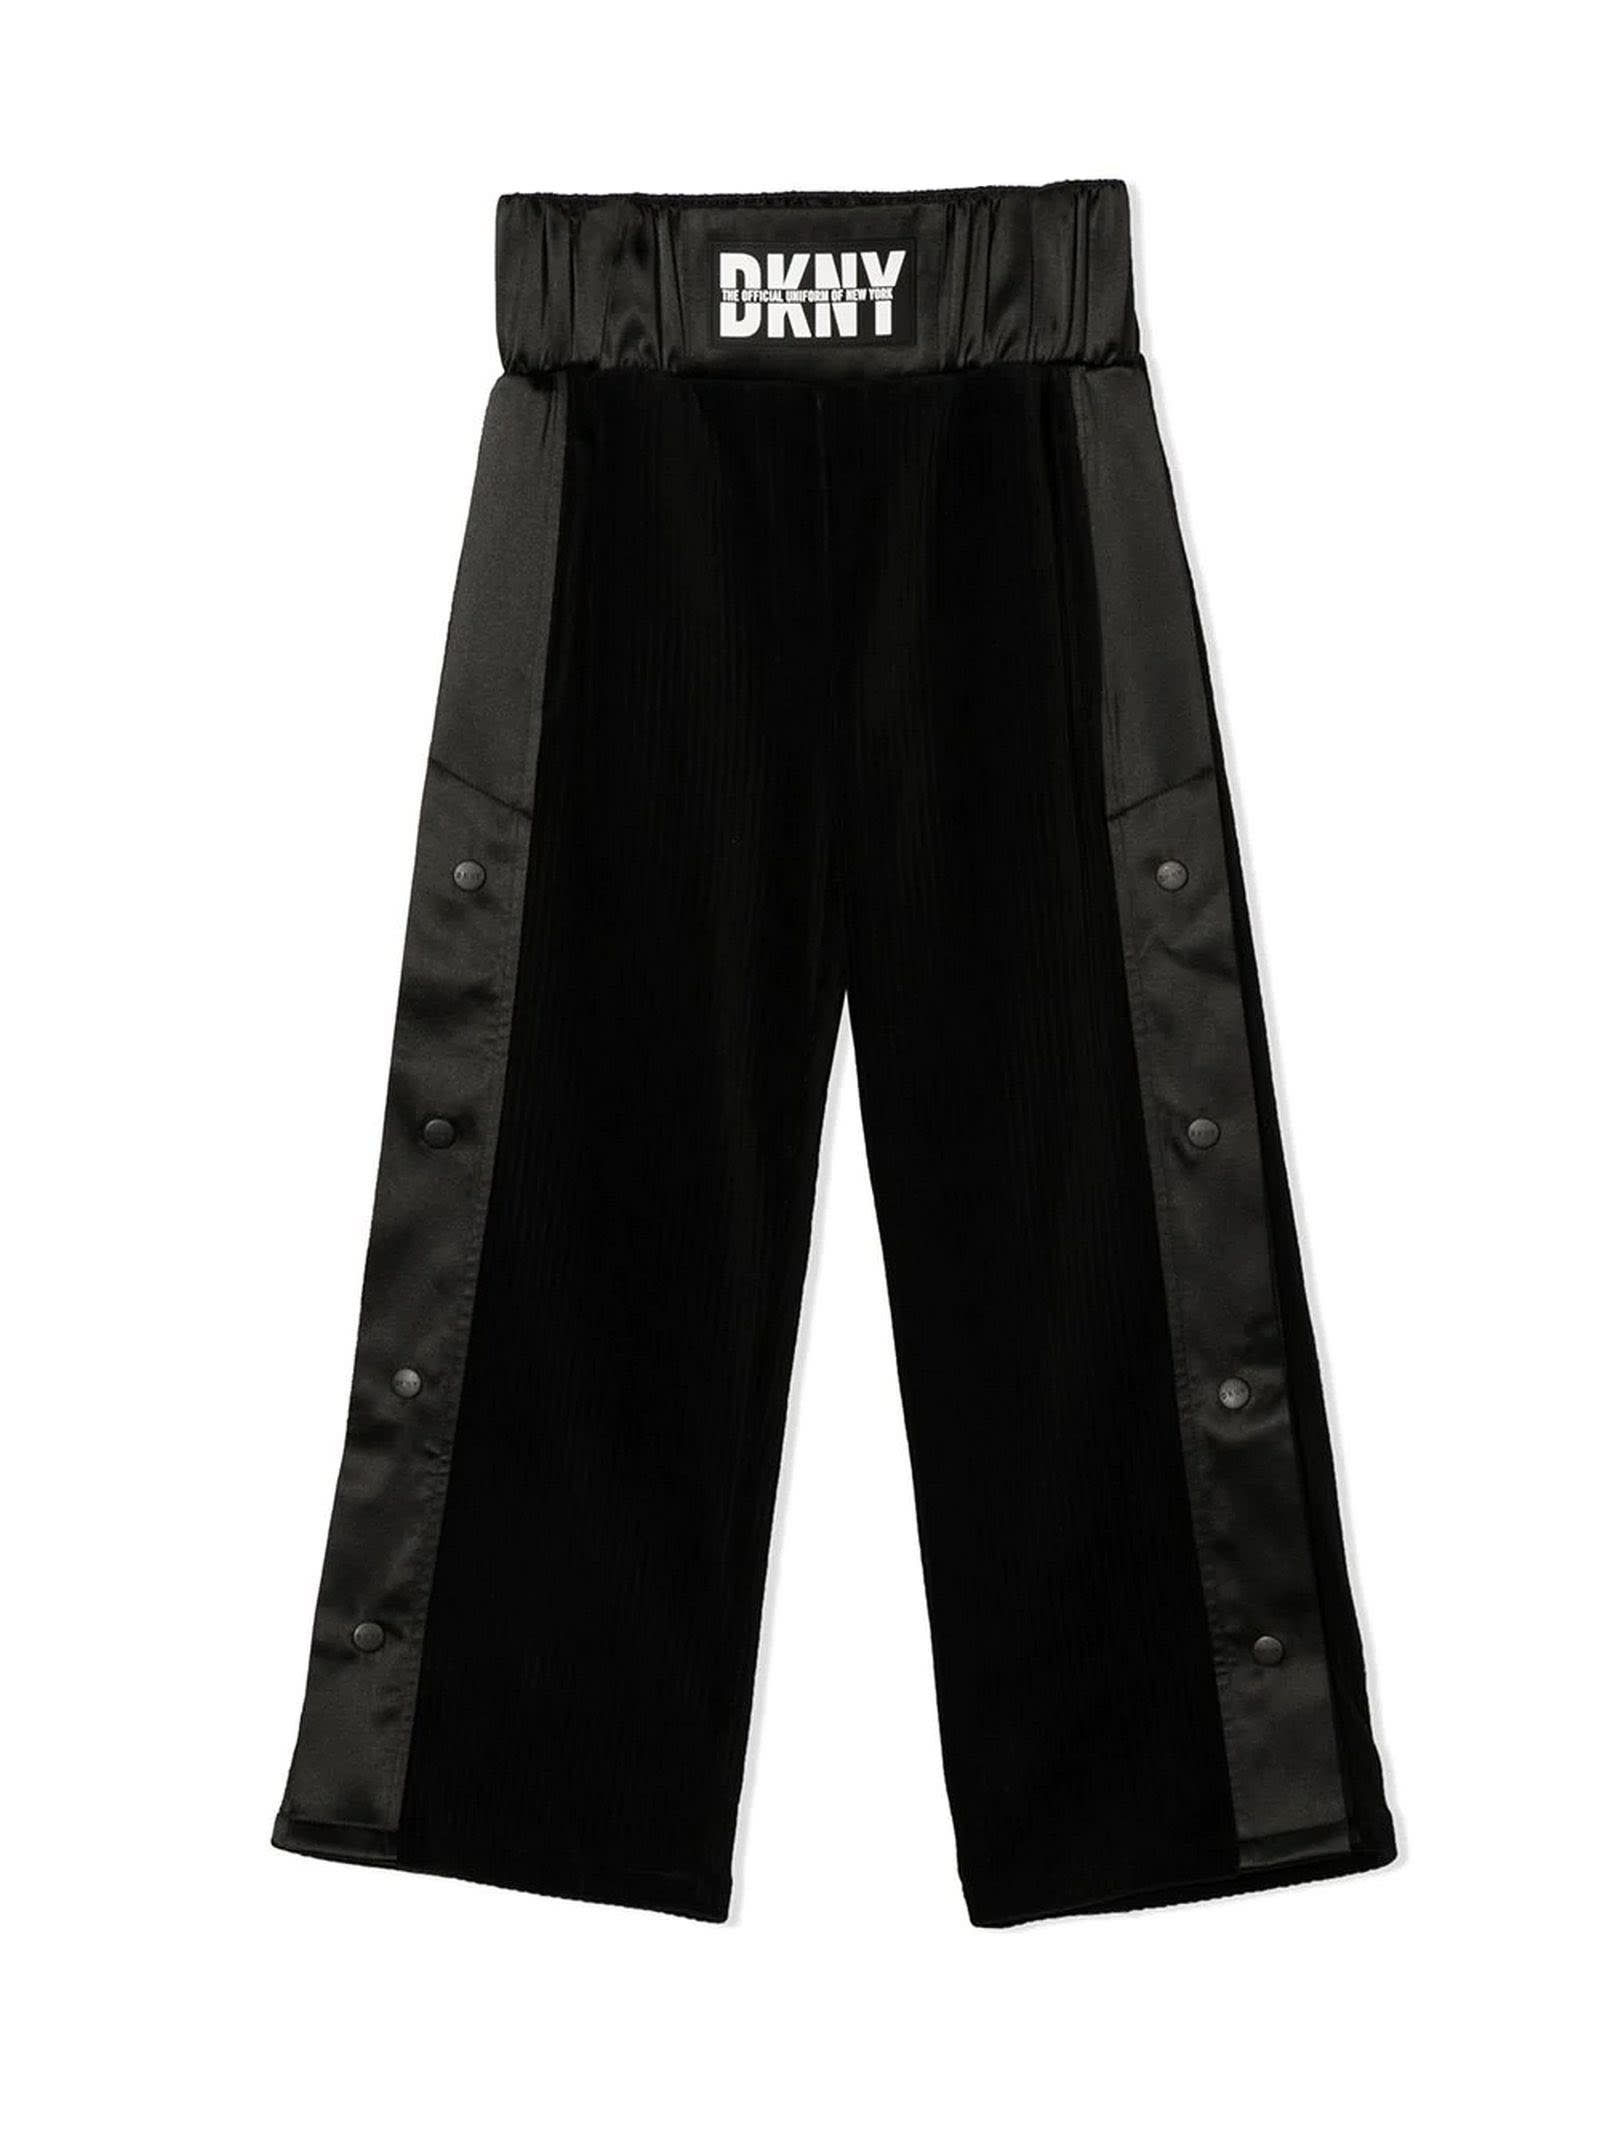 DKNY Black Cotton Blend Trousers